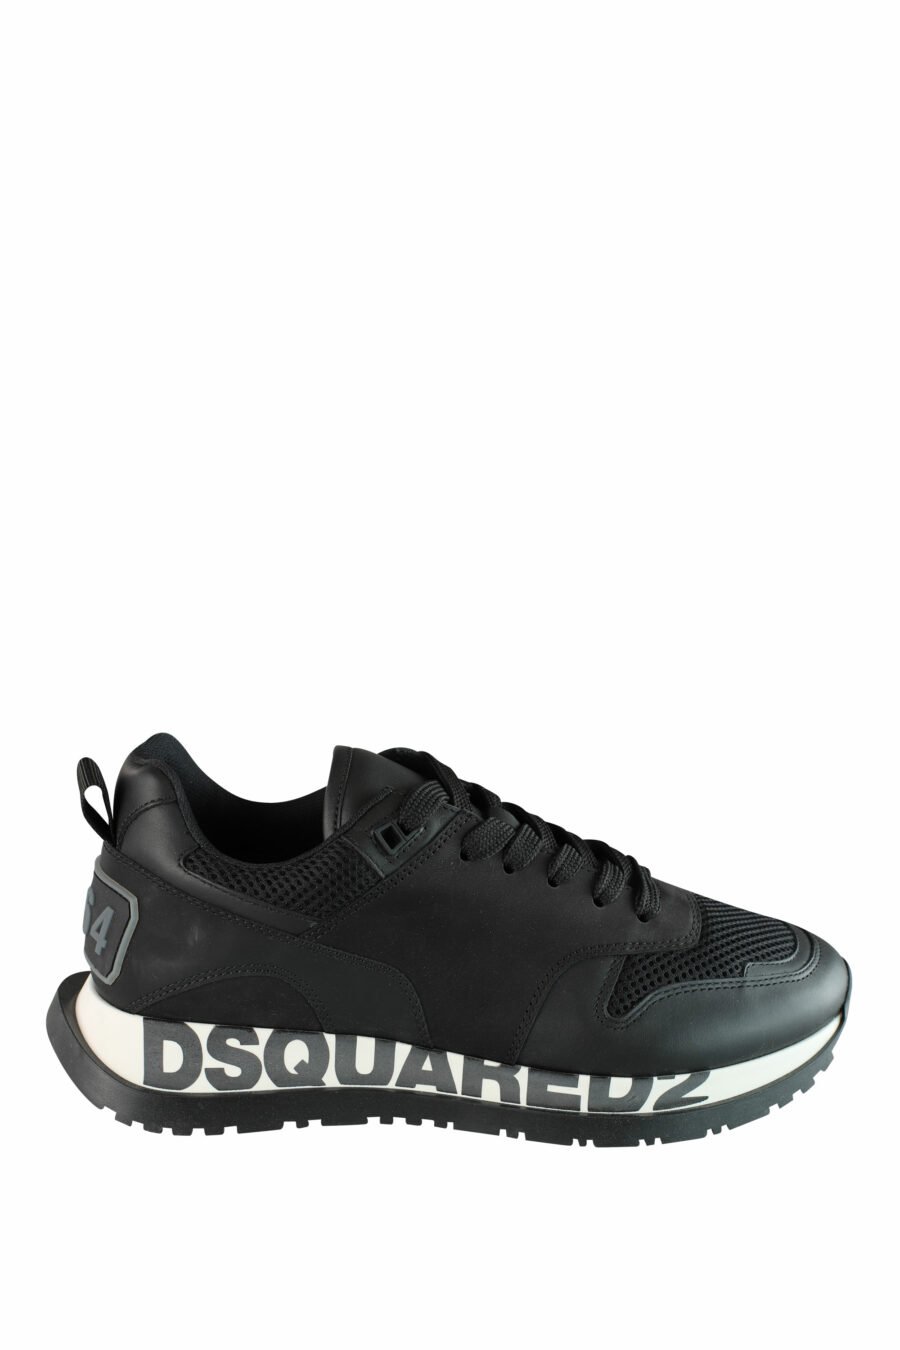 Zapatillas negras "running" con suela blanca con logo negro - IMG 1430